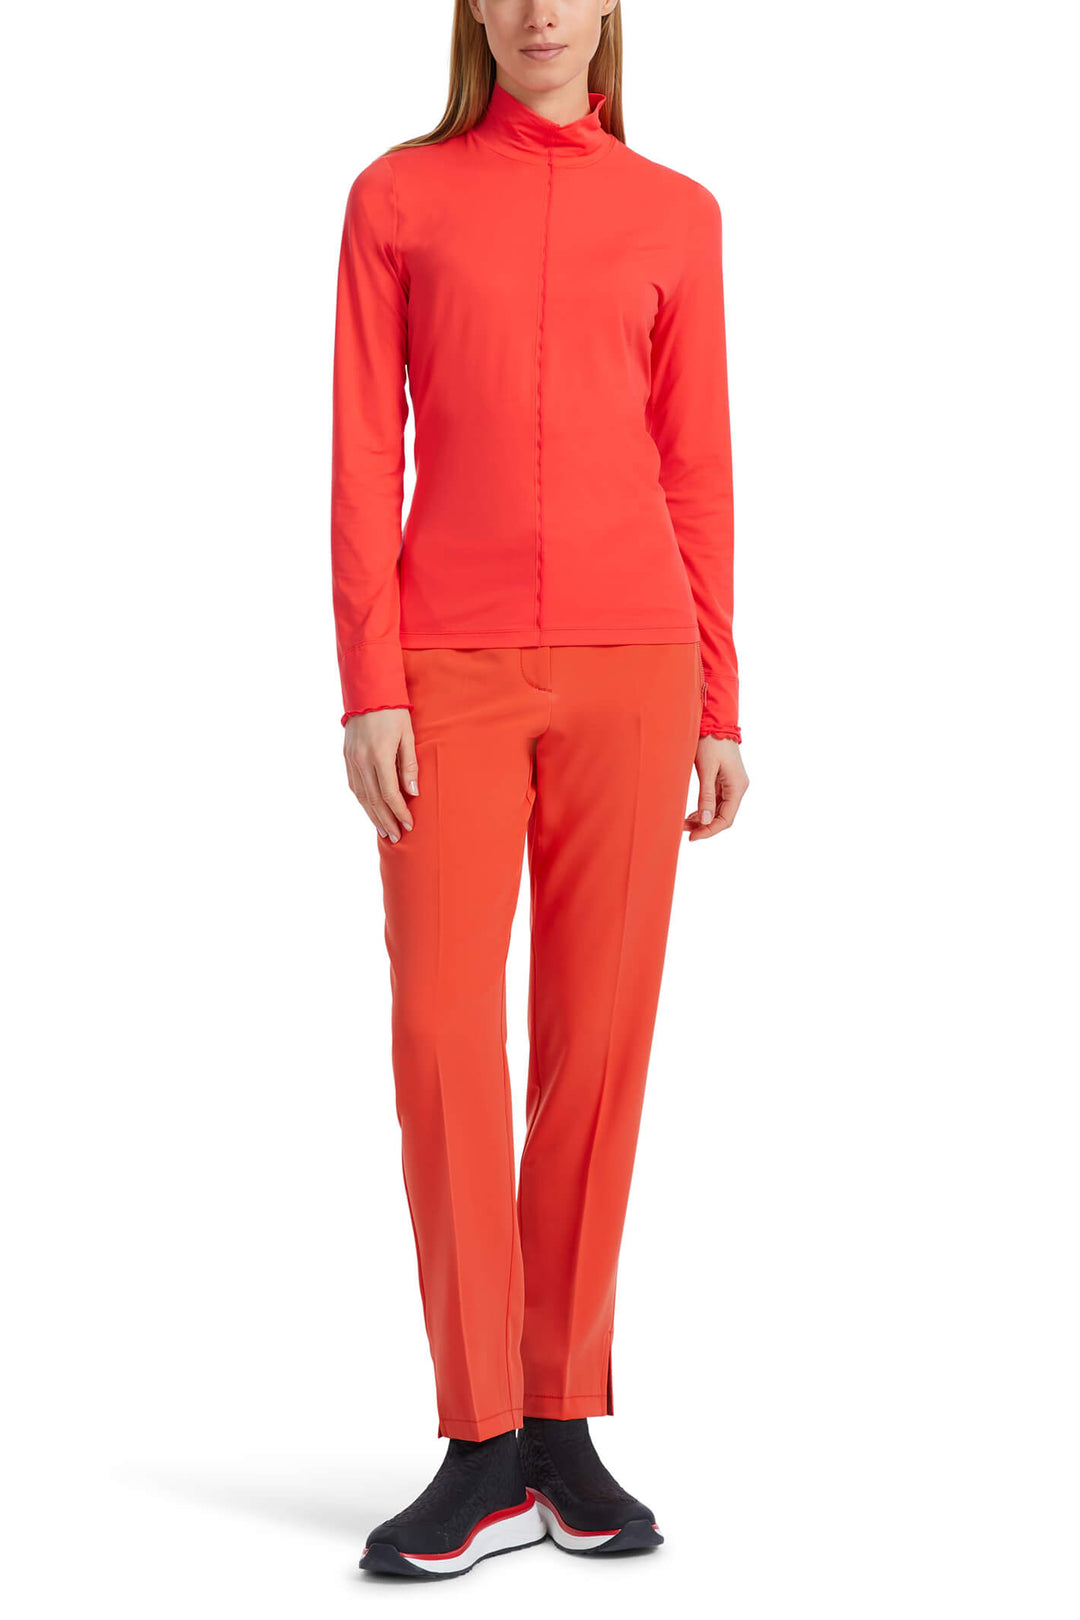 Marc Cain Sports VS 48.27 J18 278 Campari Orange Long Sleeve T-Shirt - Olivia Grace Fashion